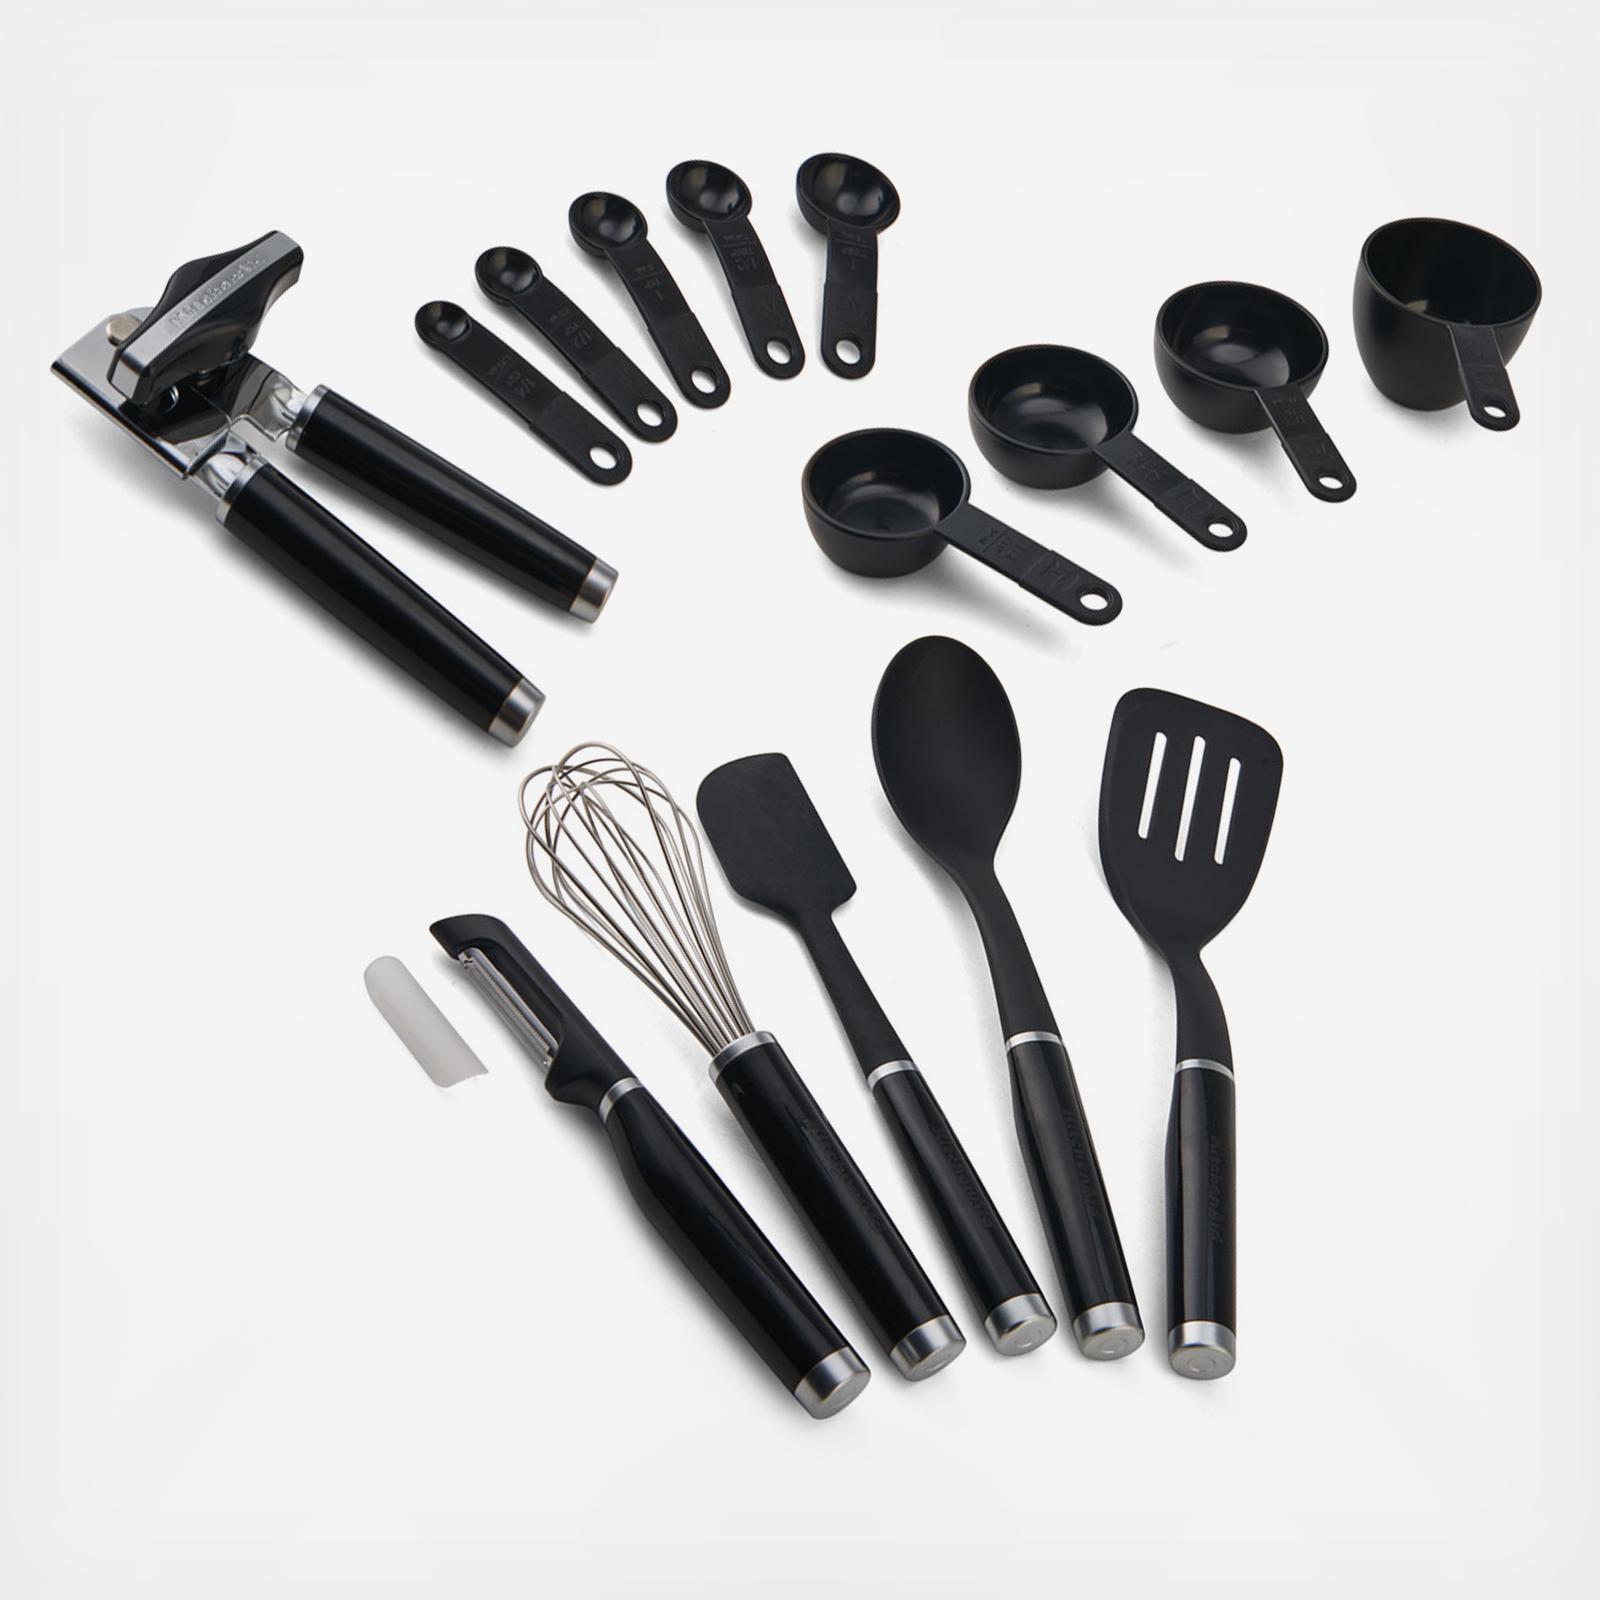 KitchenAid Kitchenaid Tool and Gadget Set with Crock, 6-Piece, Aqua